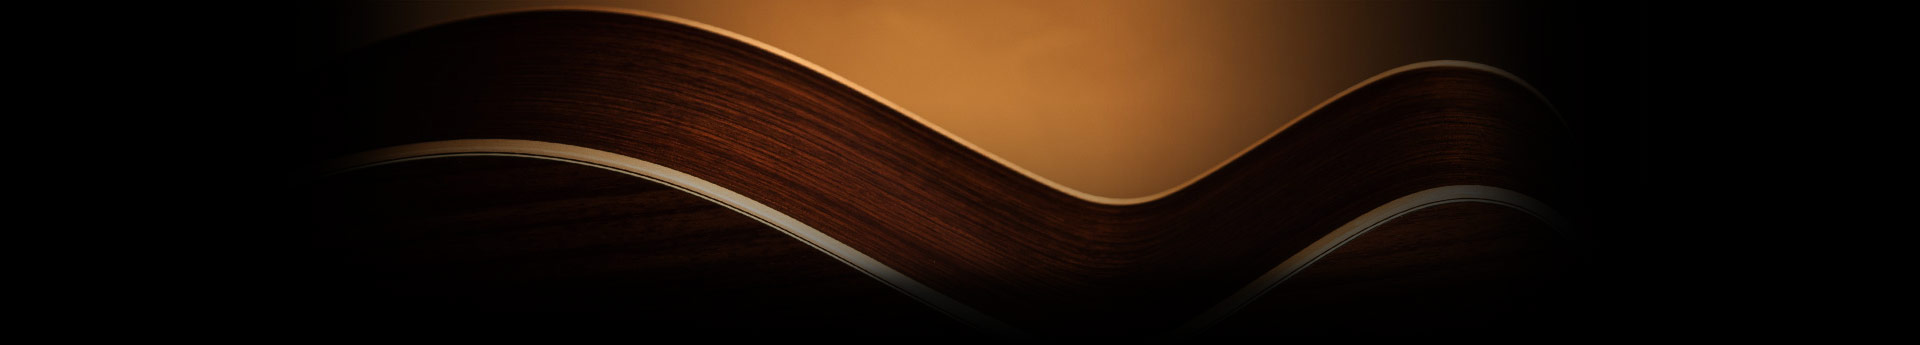 Identification takamine serial number Yamaha Guitar